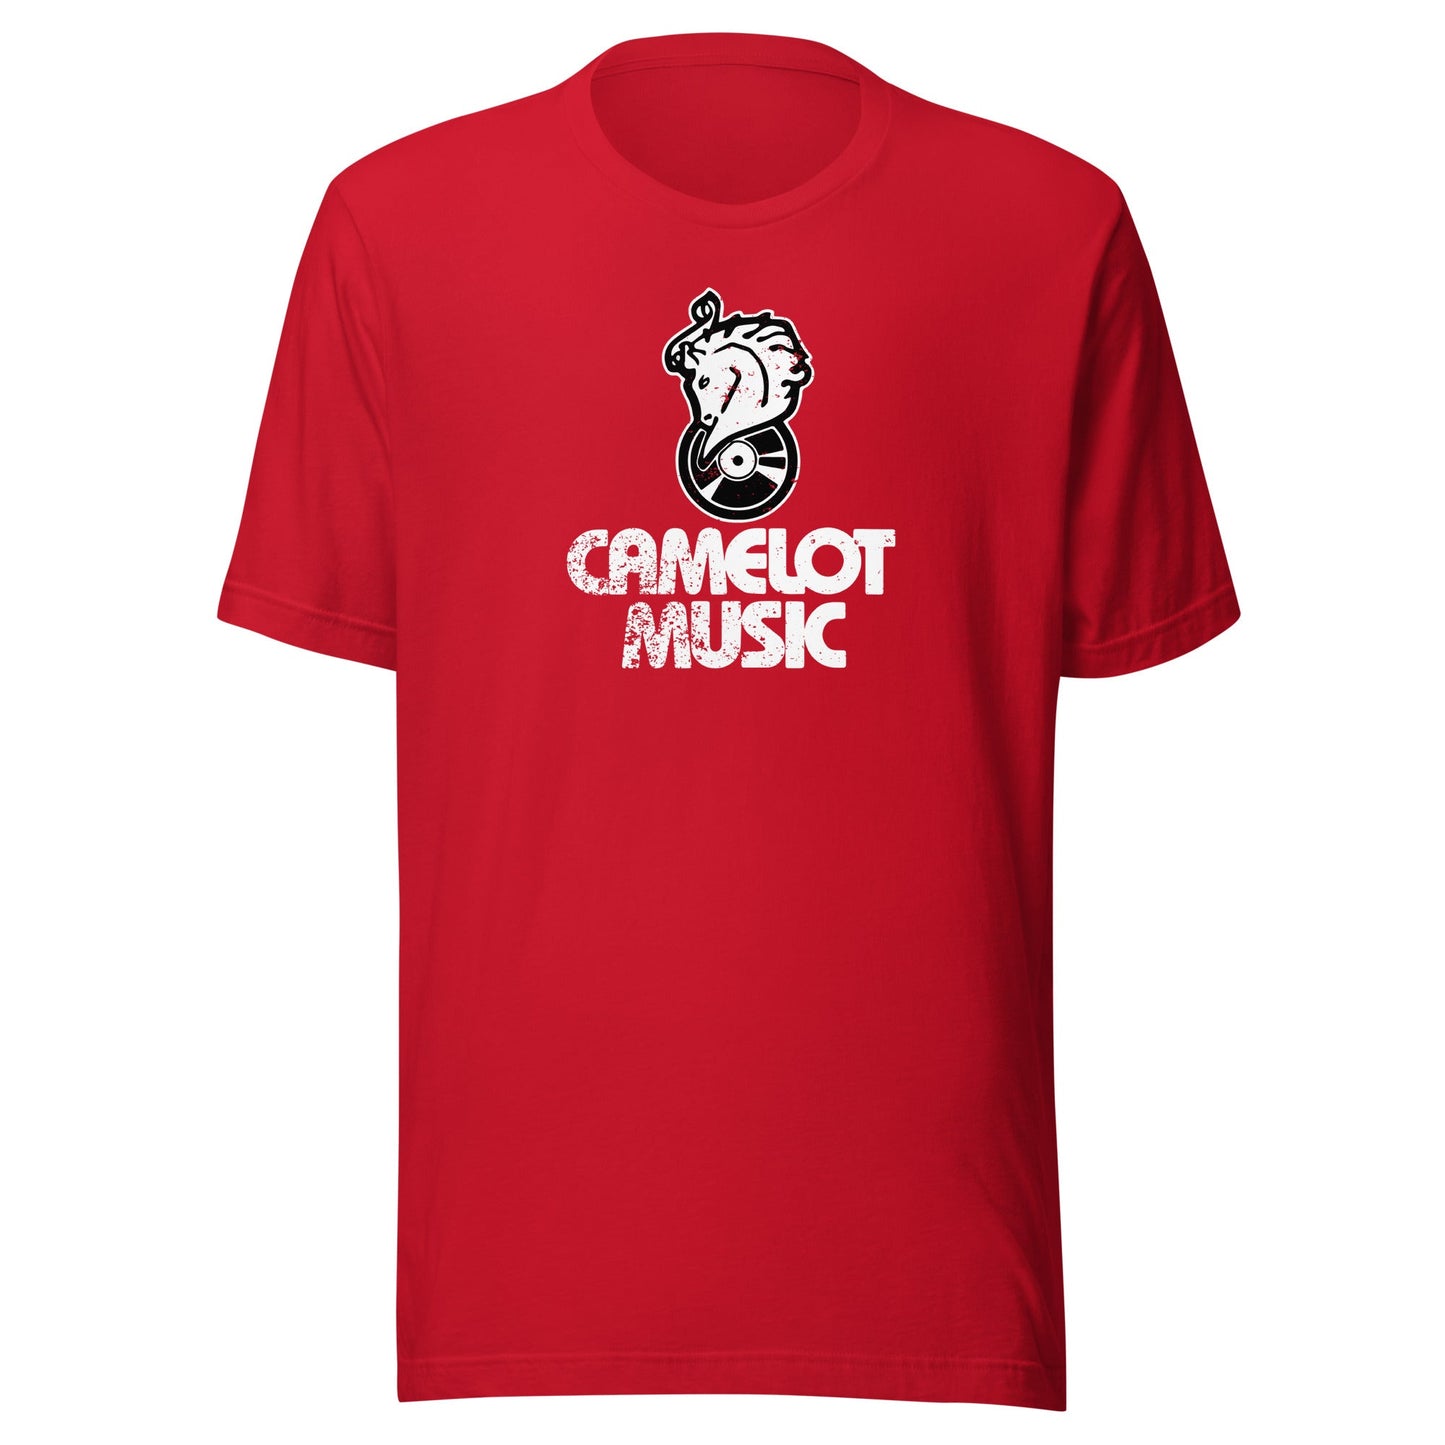 Camelot Music T-Shirt - Retro 1980s Music Store Tee